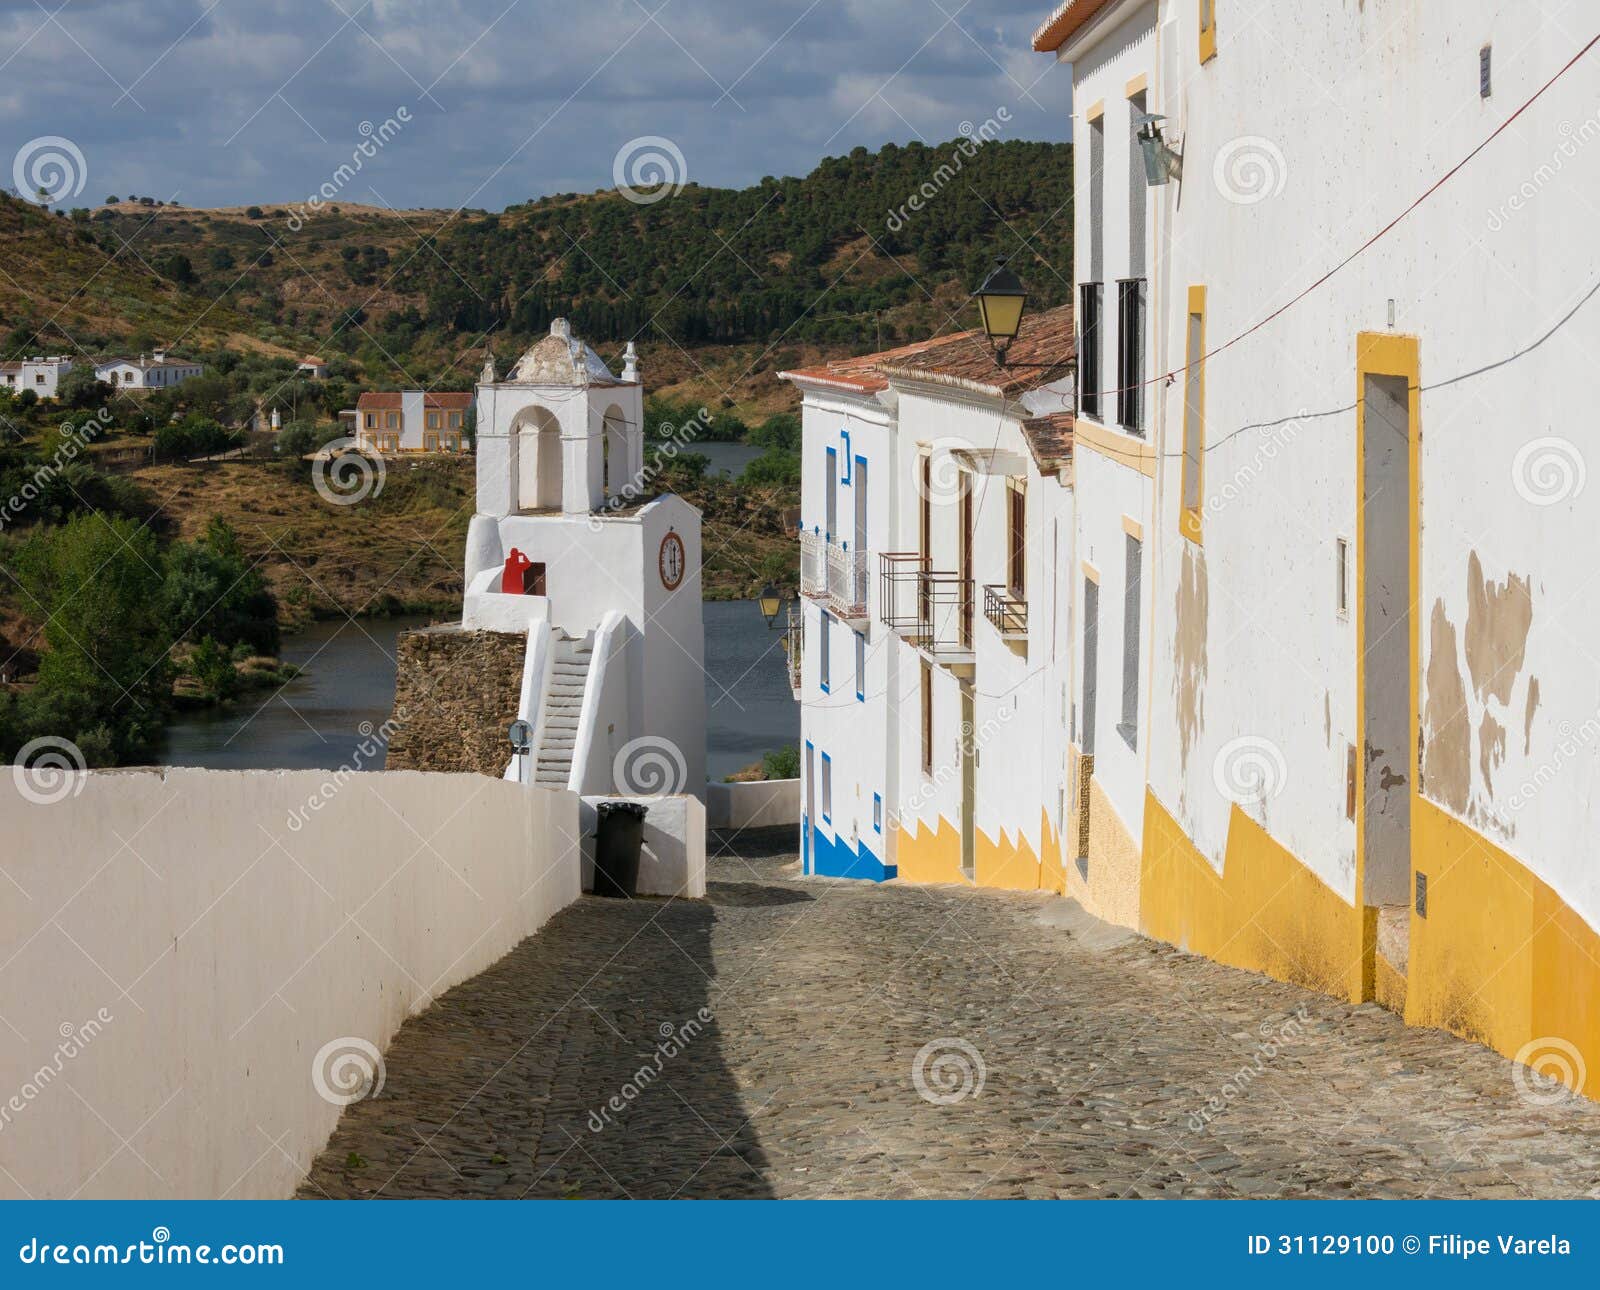 mertola municipality in southeastern portugal next